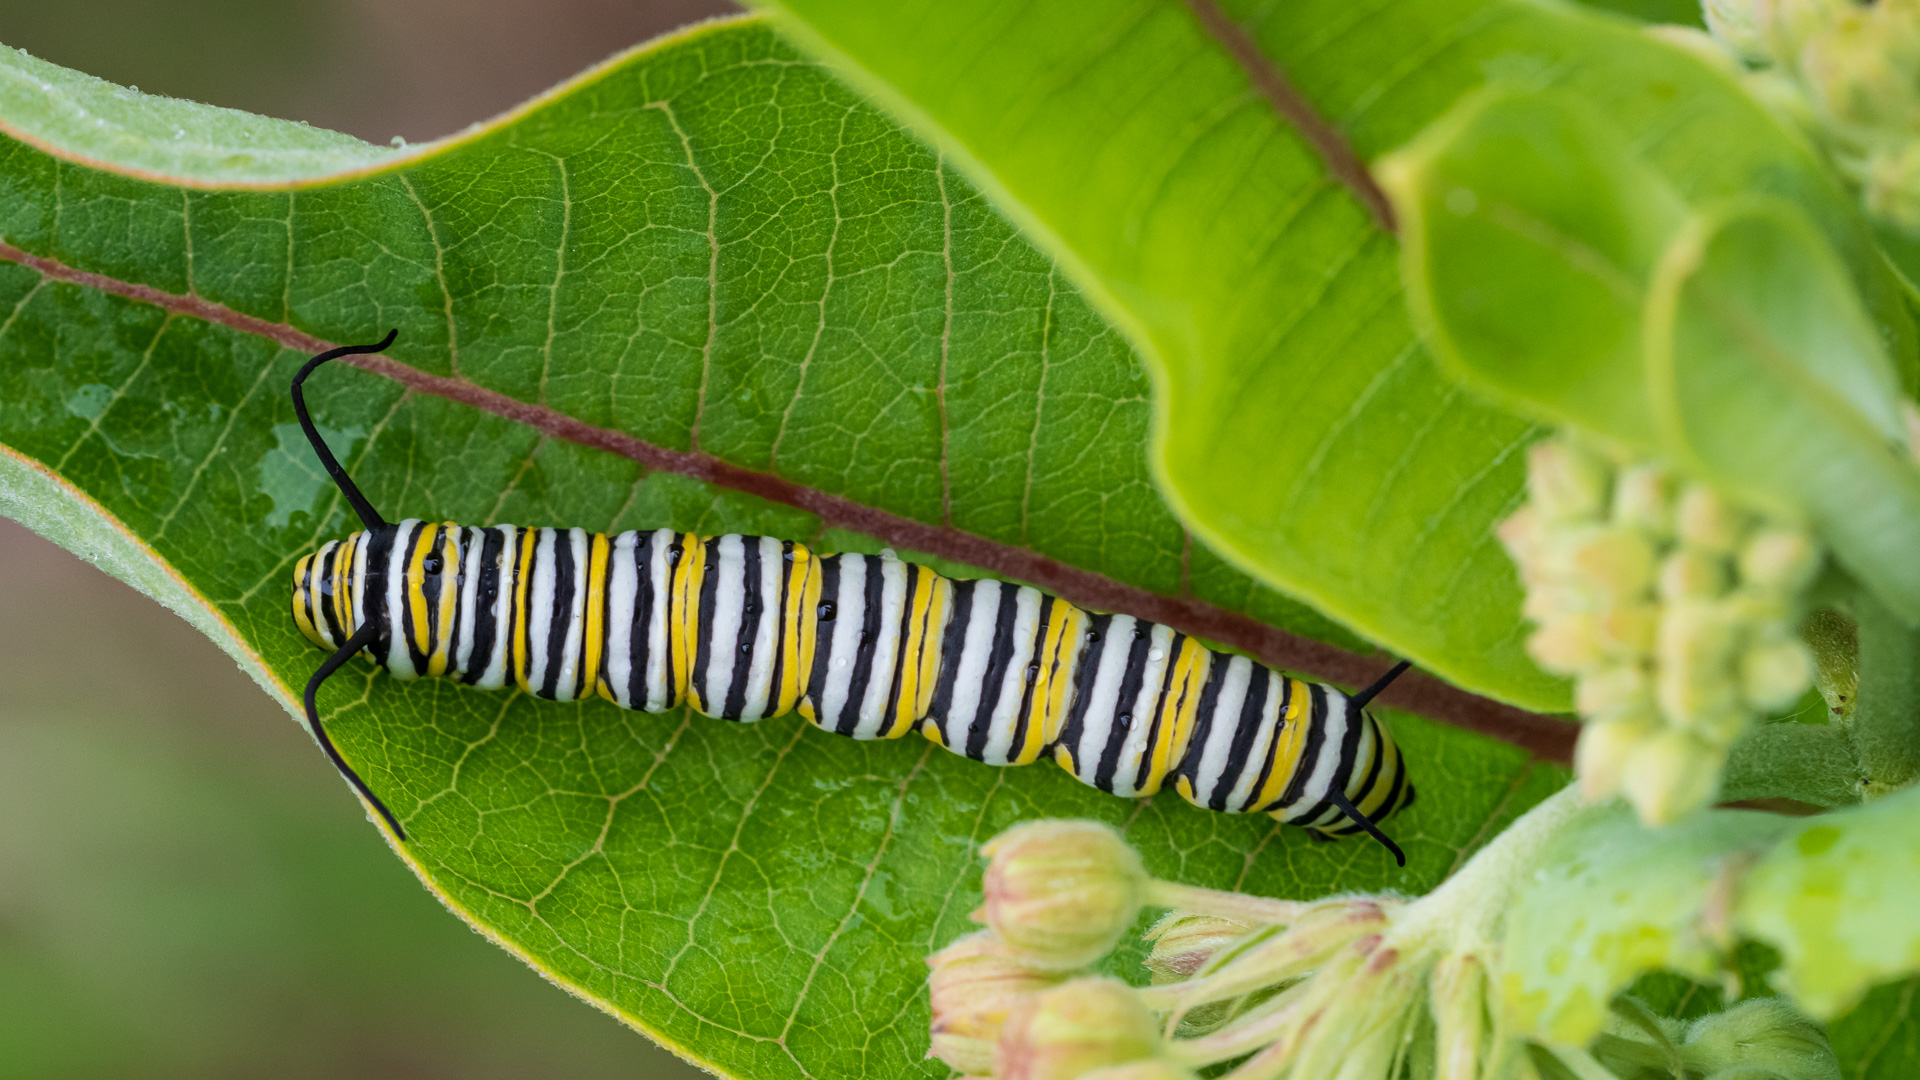 m caterpillar-1.jpg